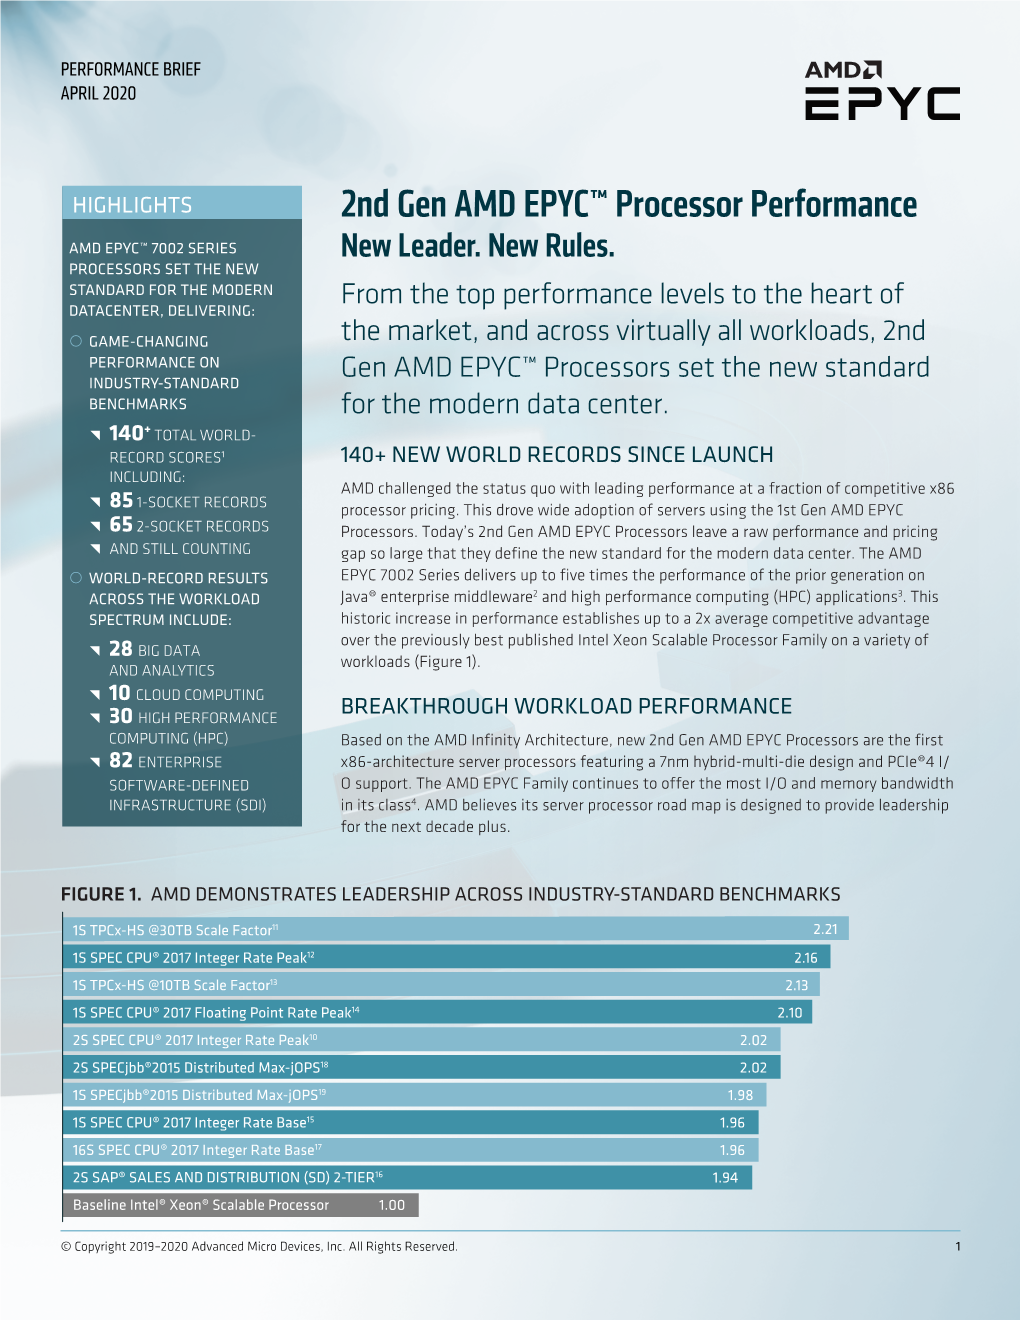 2Nd Gen AMD EPYC™ Processor Performance AMD EPYC™ 7002 SERIES New Leader